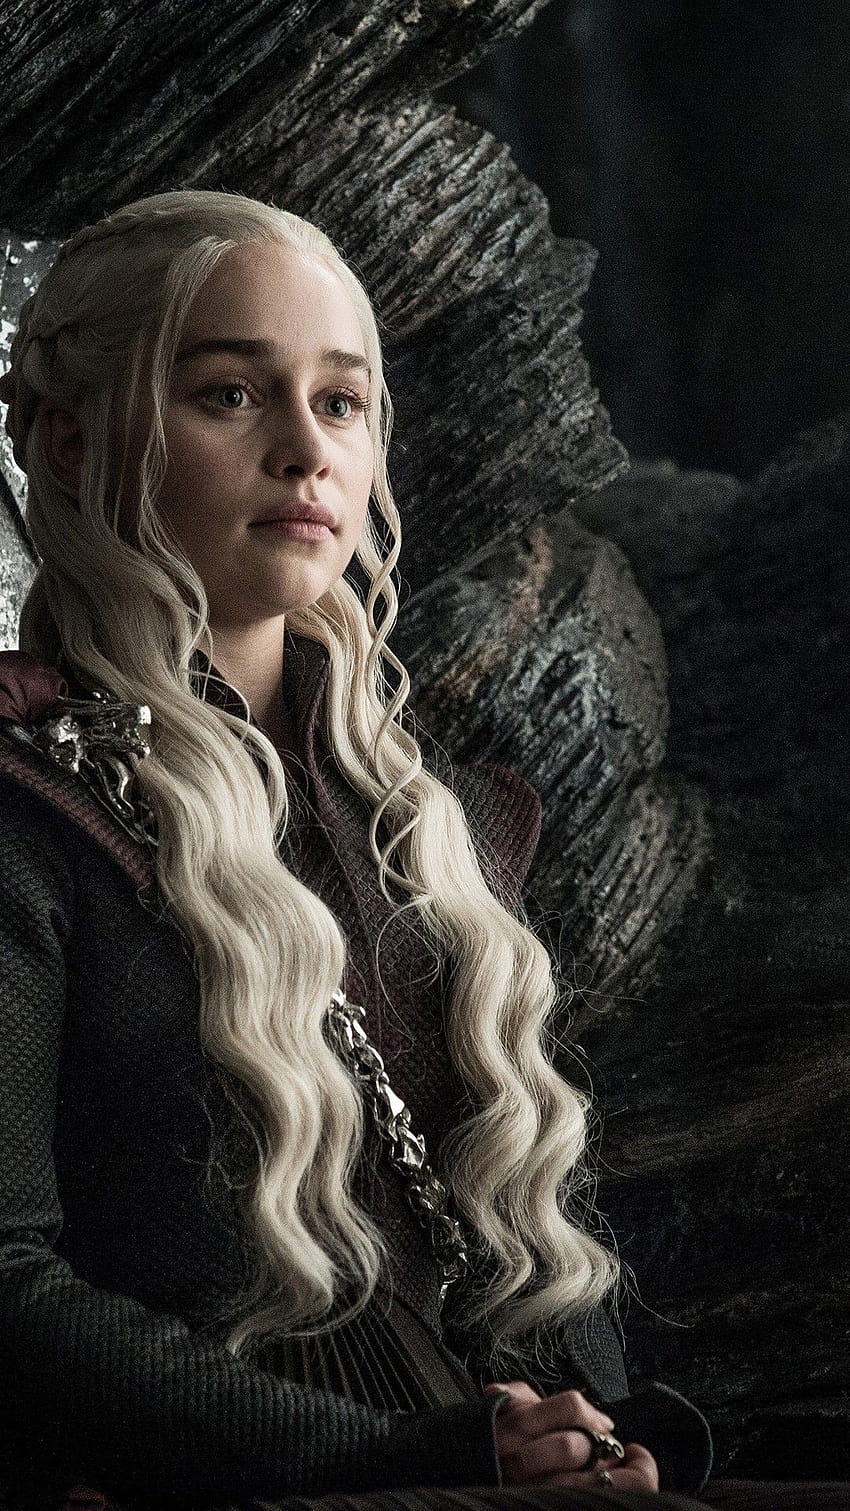 Game of Thrones 8 Season iPhone 7, daenerys targaryen iphone HD phone wallpaper